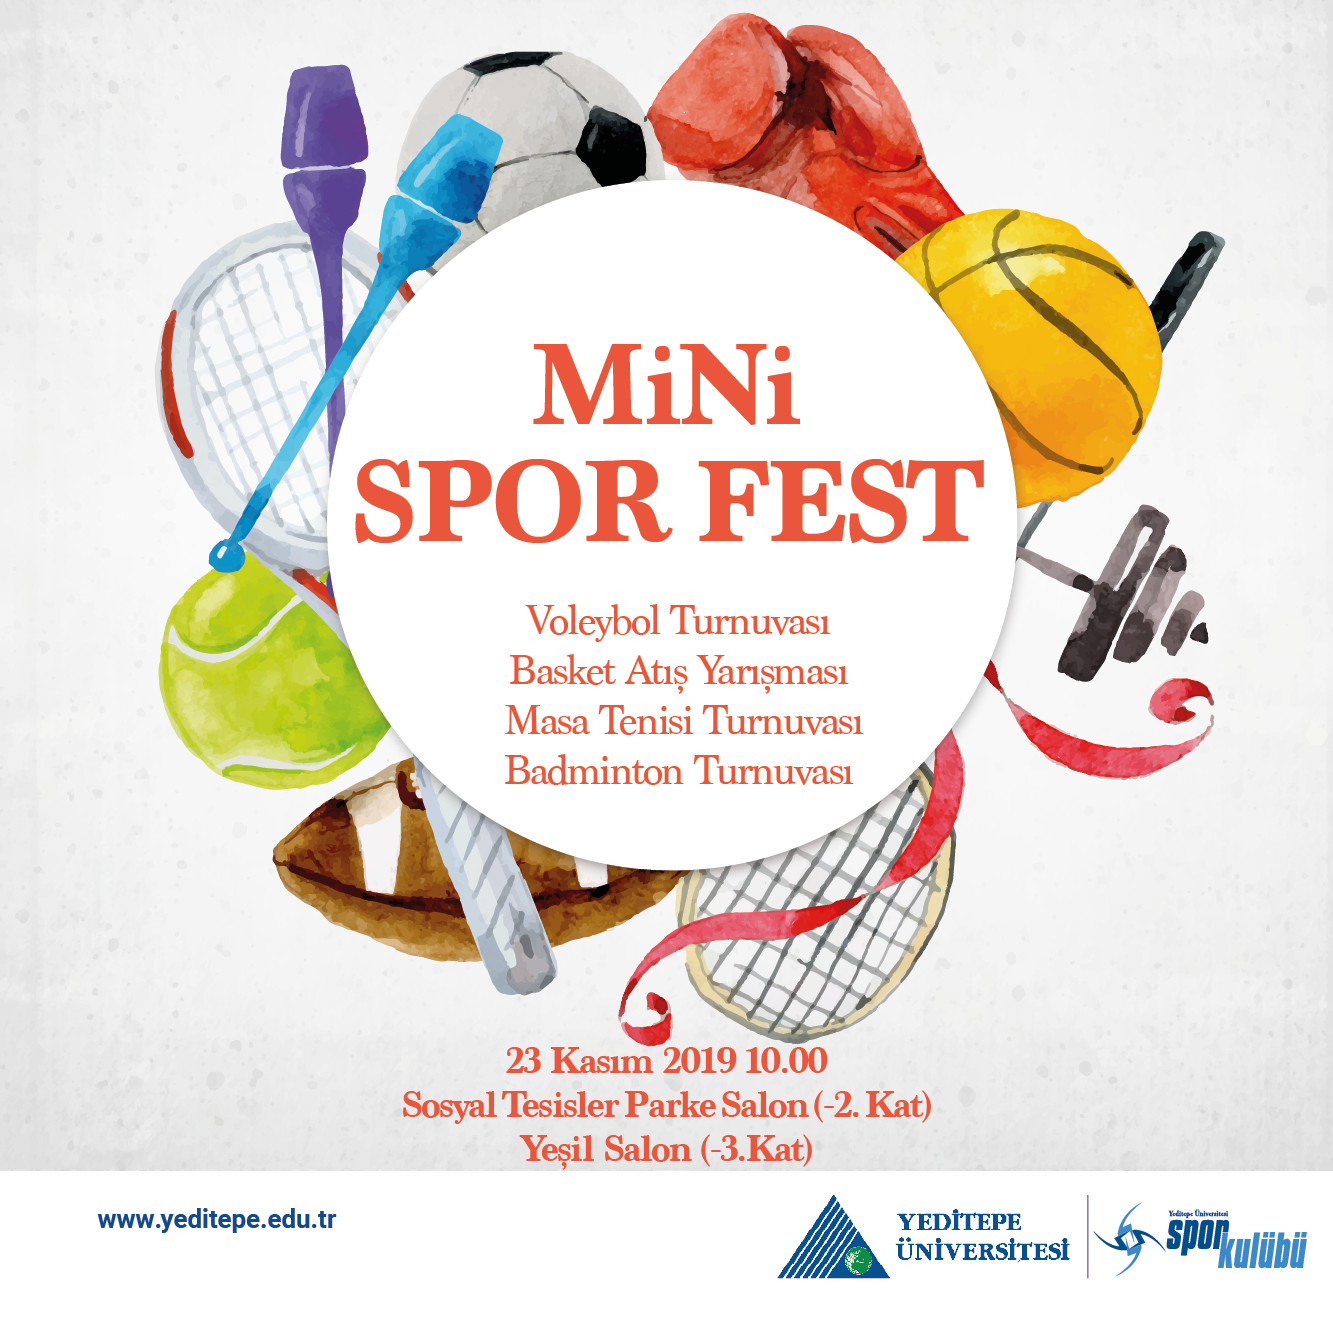 Mini Spor Fest